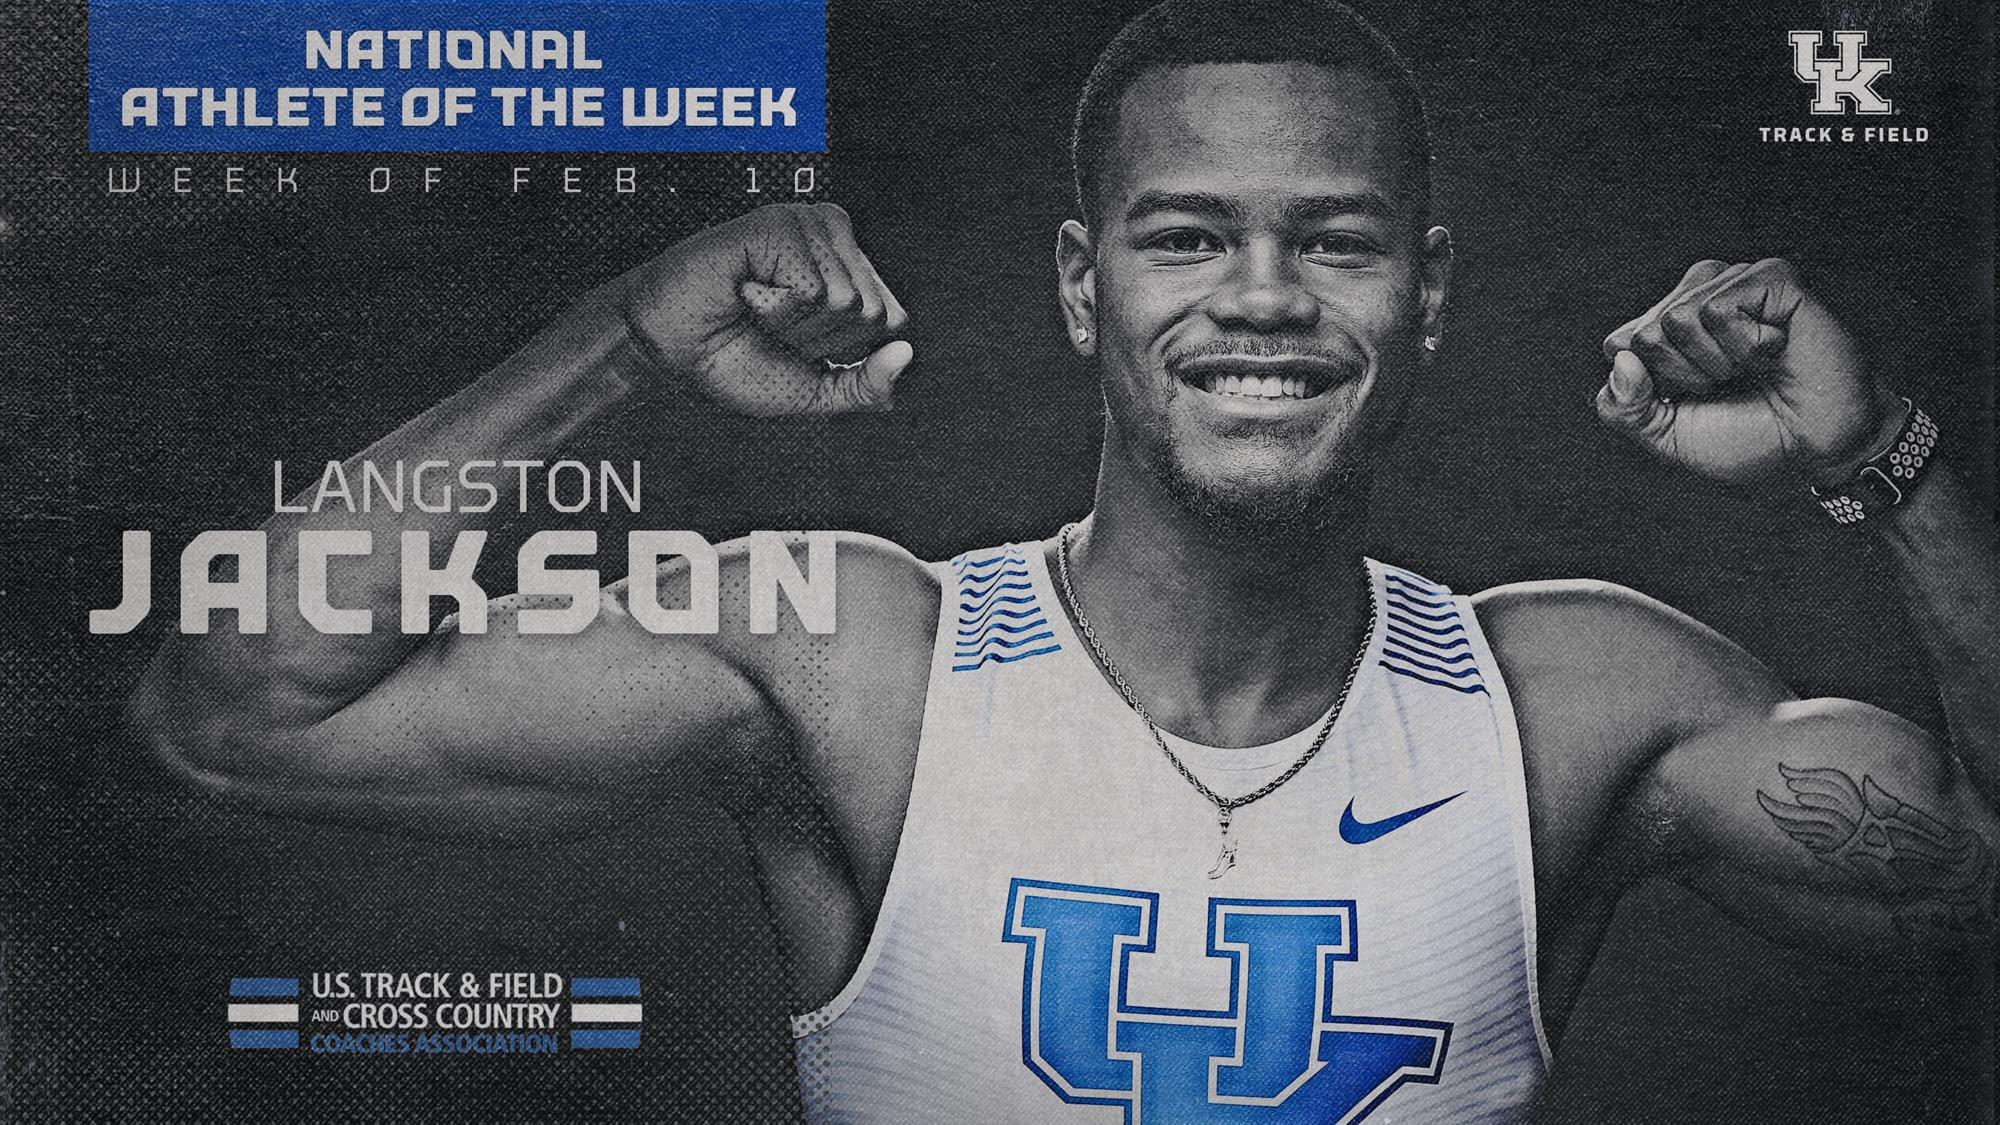 Langston Jackson Named National Athlete of the Week